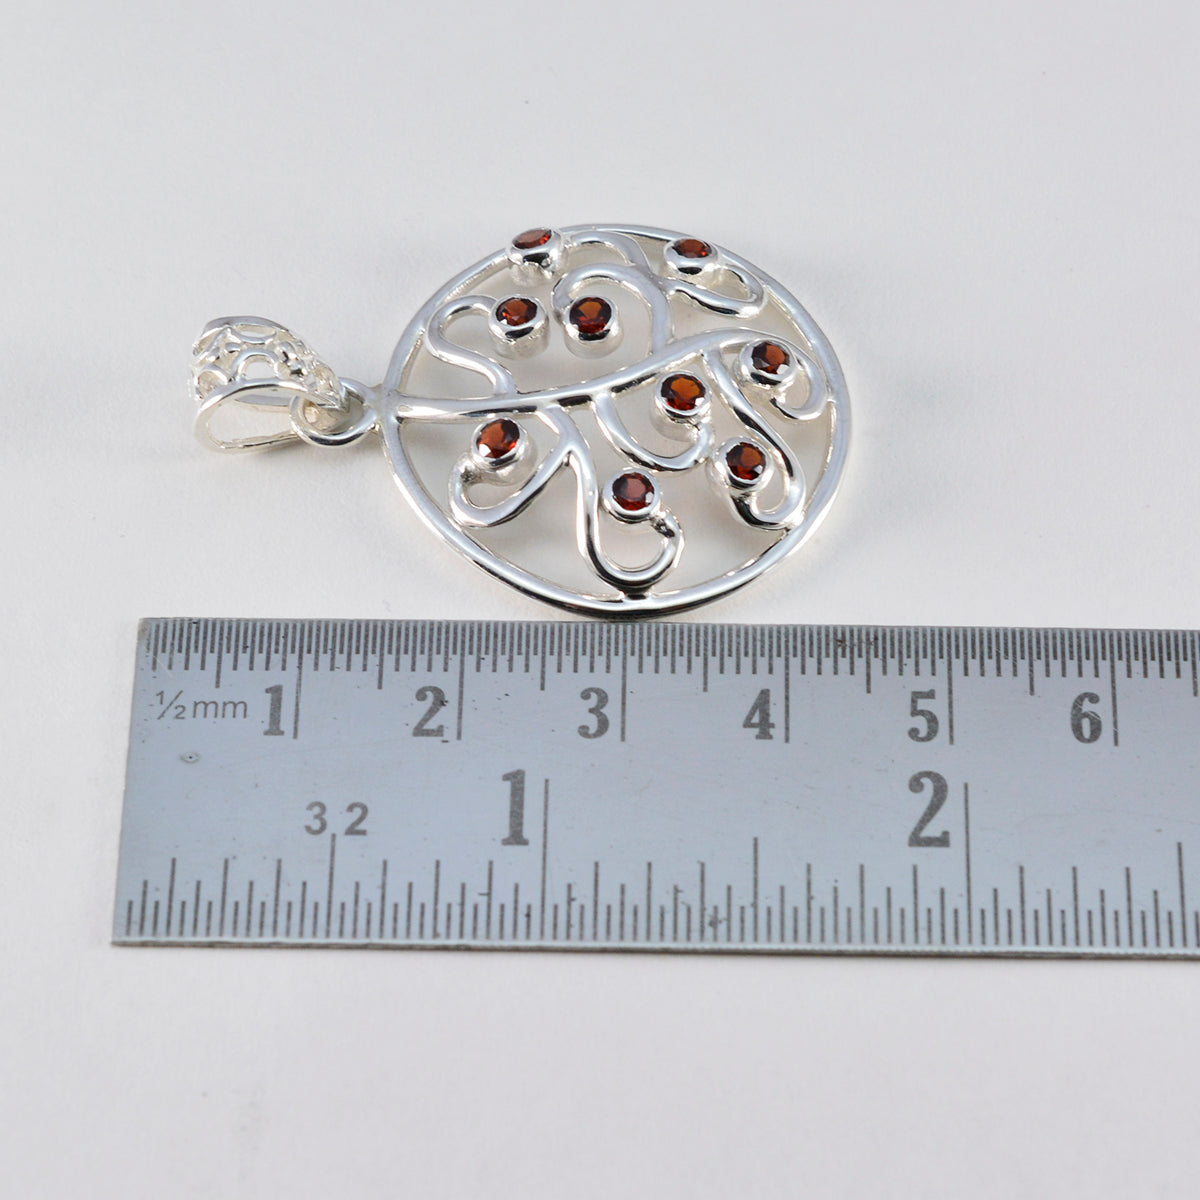 Riyo Lovely Gemstone Round Faceted Red Garnet 1045 Sterling Silver Pendant Gift For Birthday